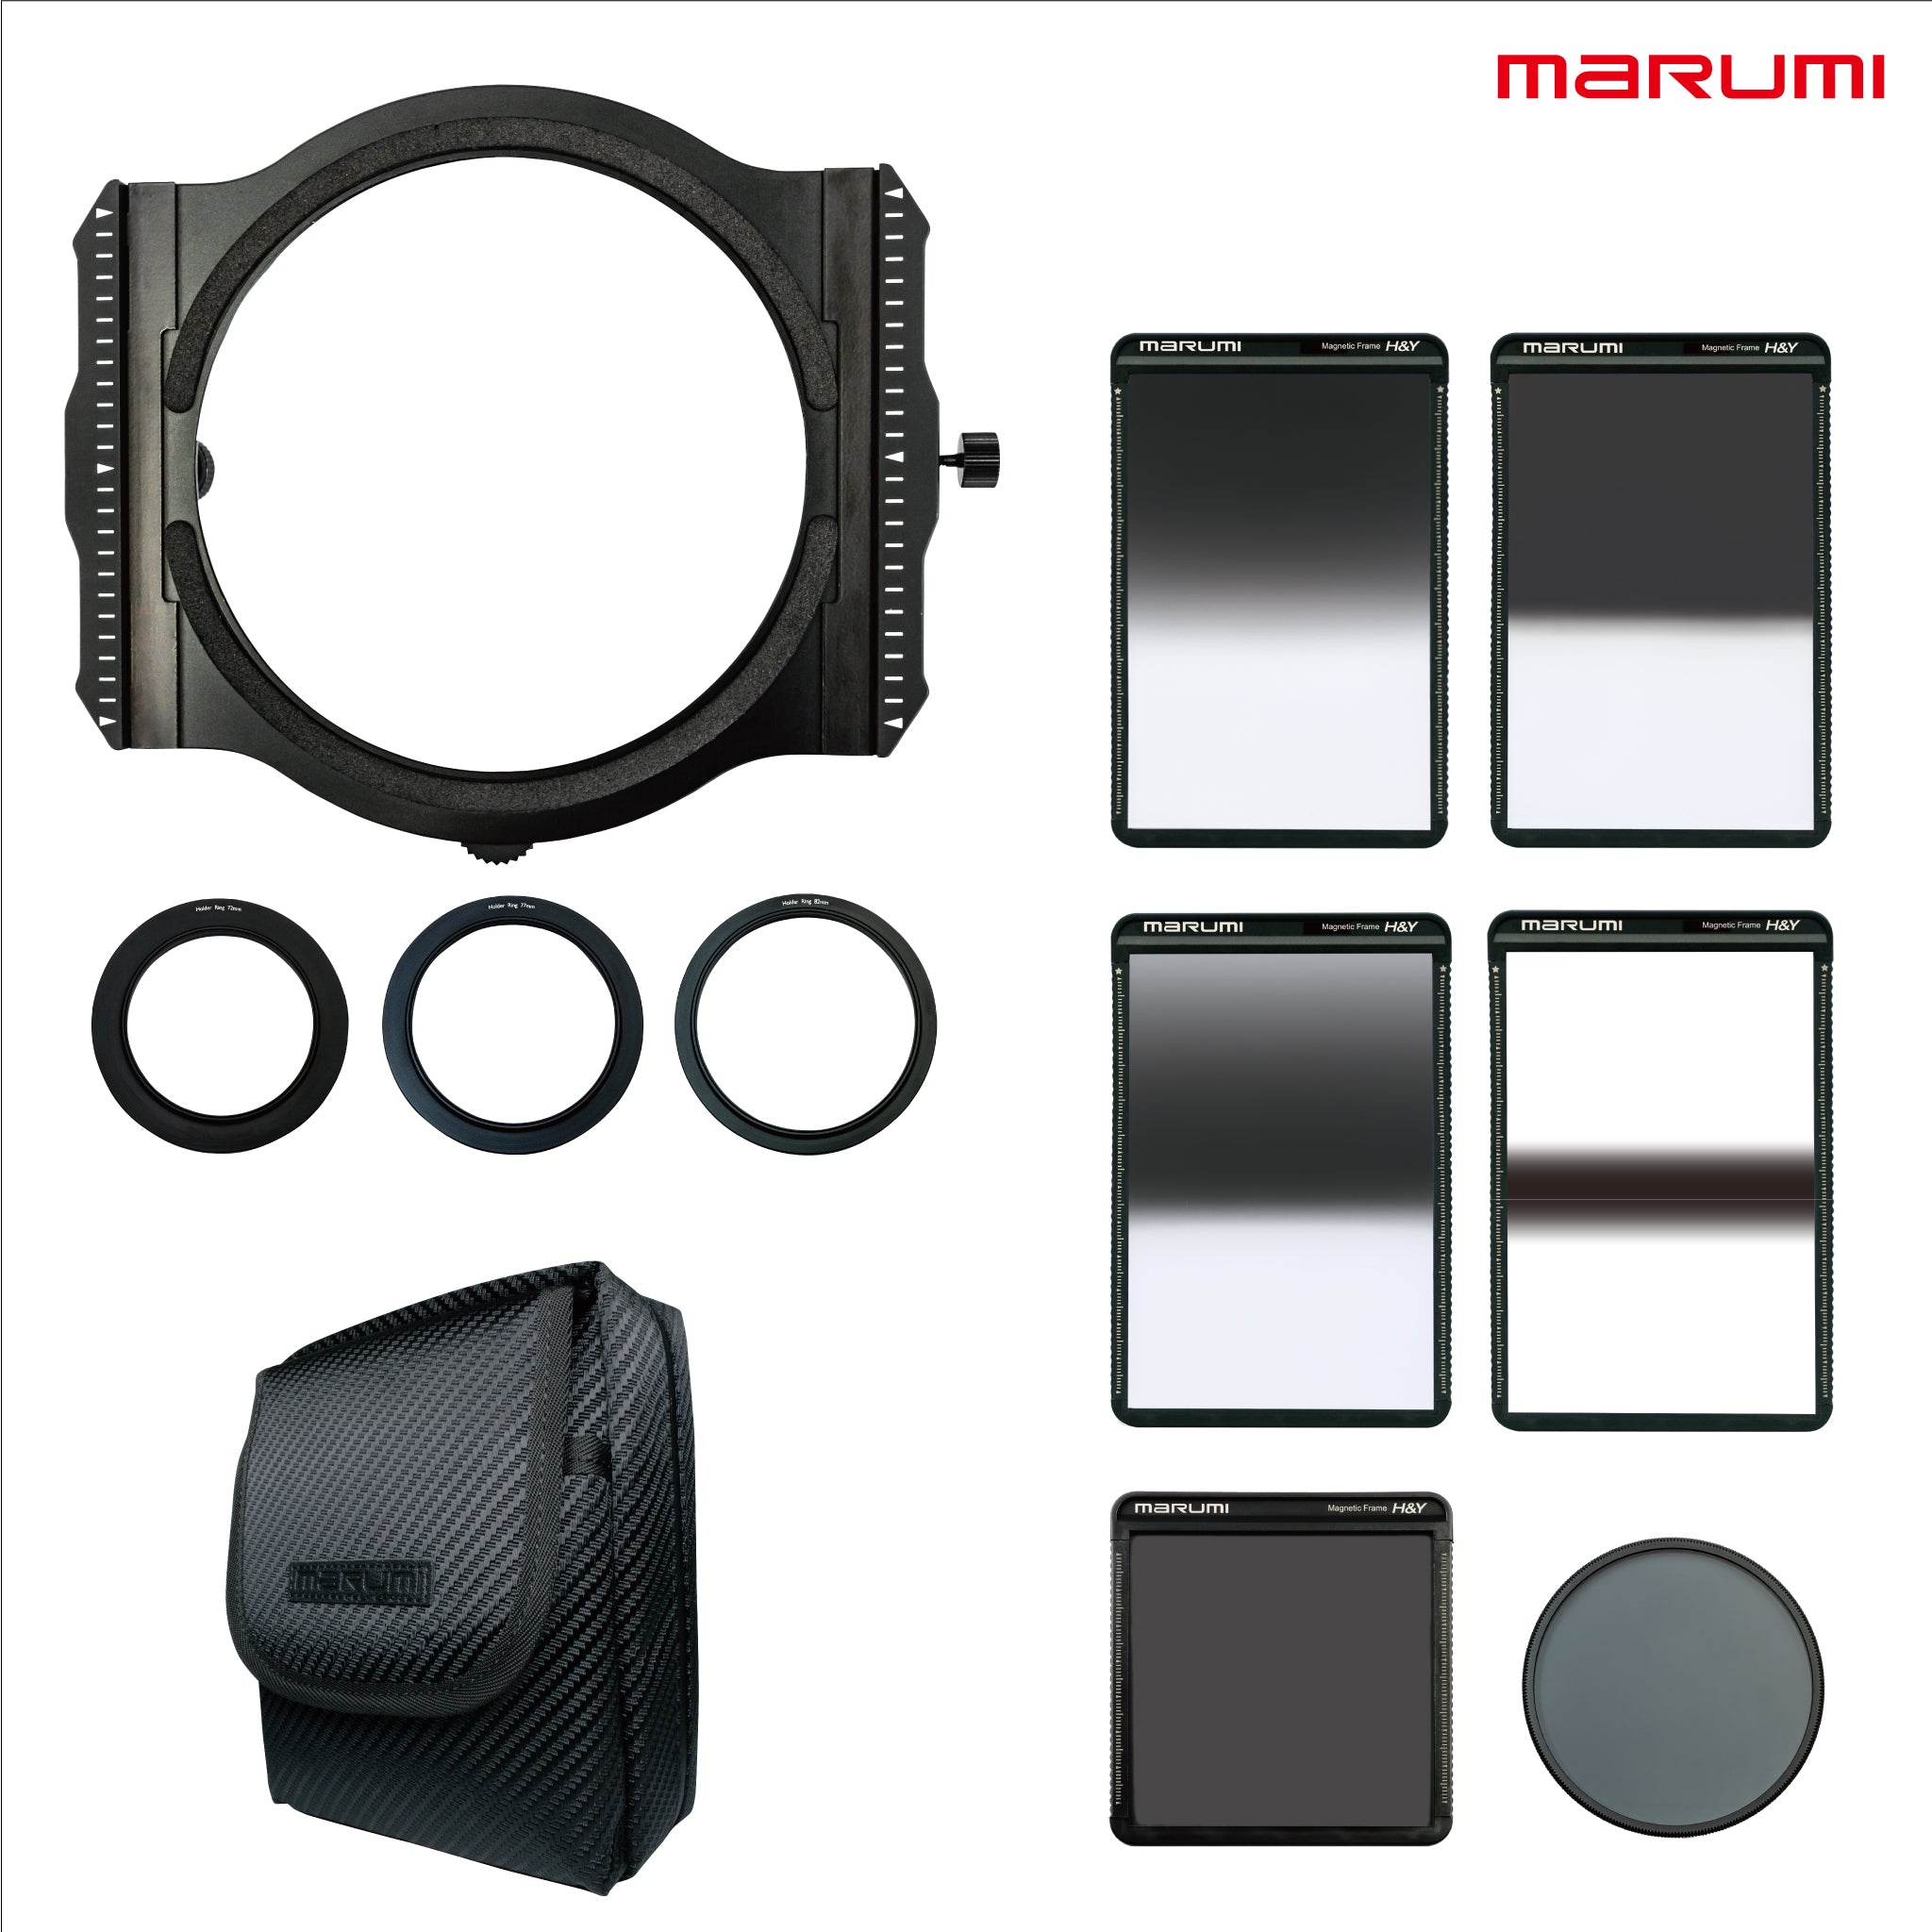 Marumi Premium Kit for M100 Magnetic Holder System – marumi